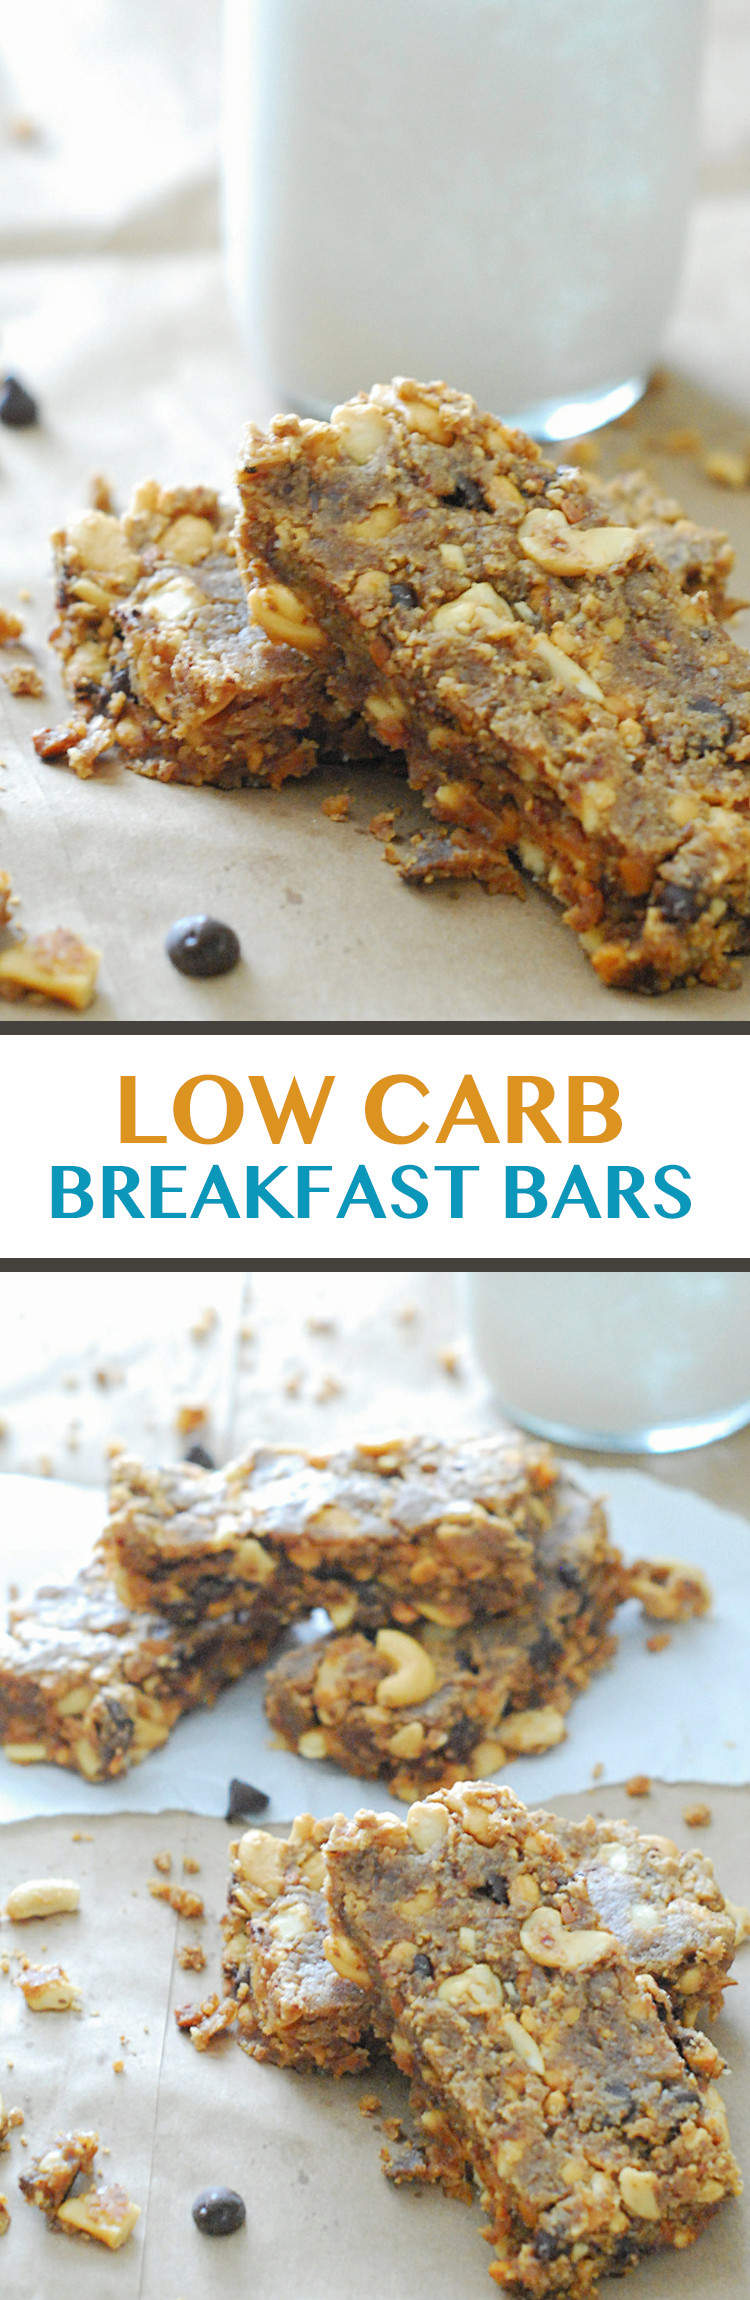 Low Carb Breakfast Bar Recipe
 Peanut Butter Breakfast Bars Low Carb Recipe